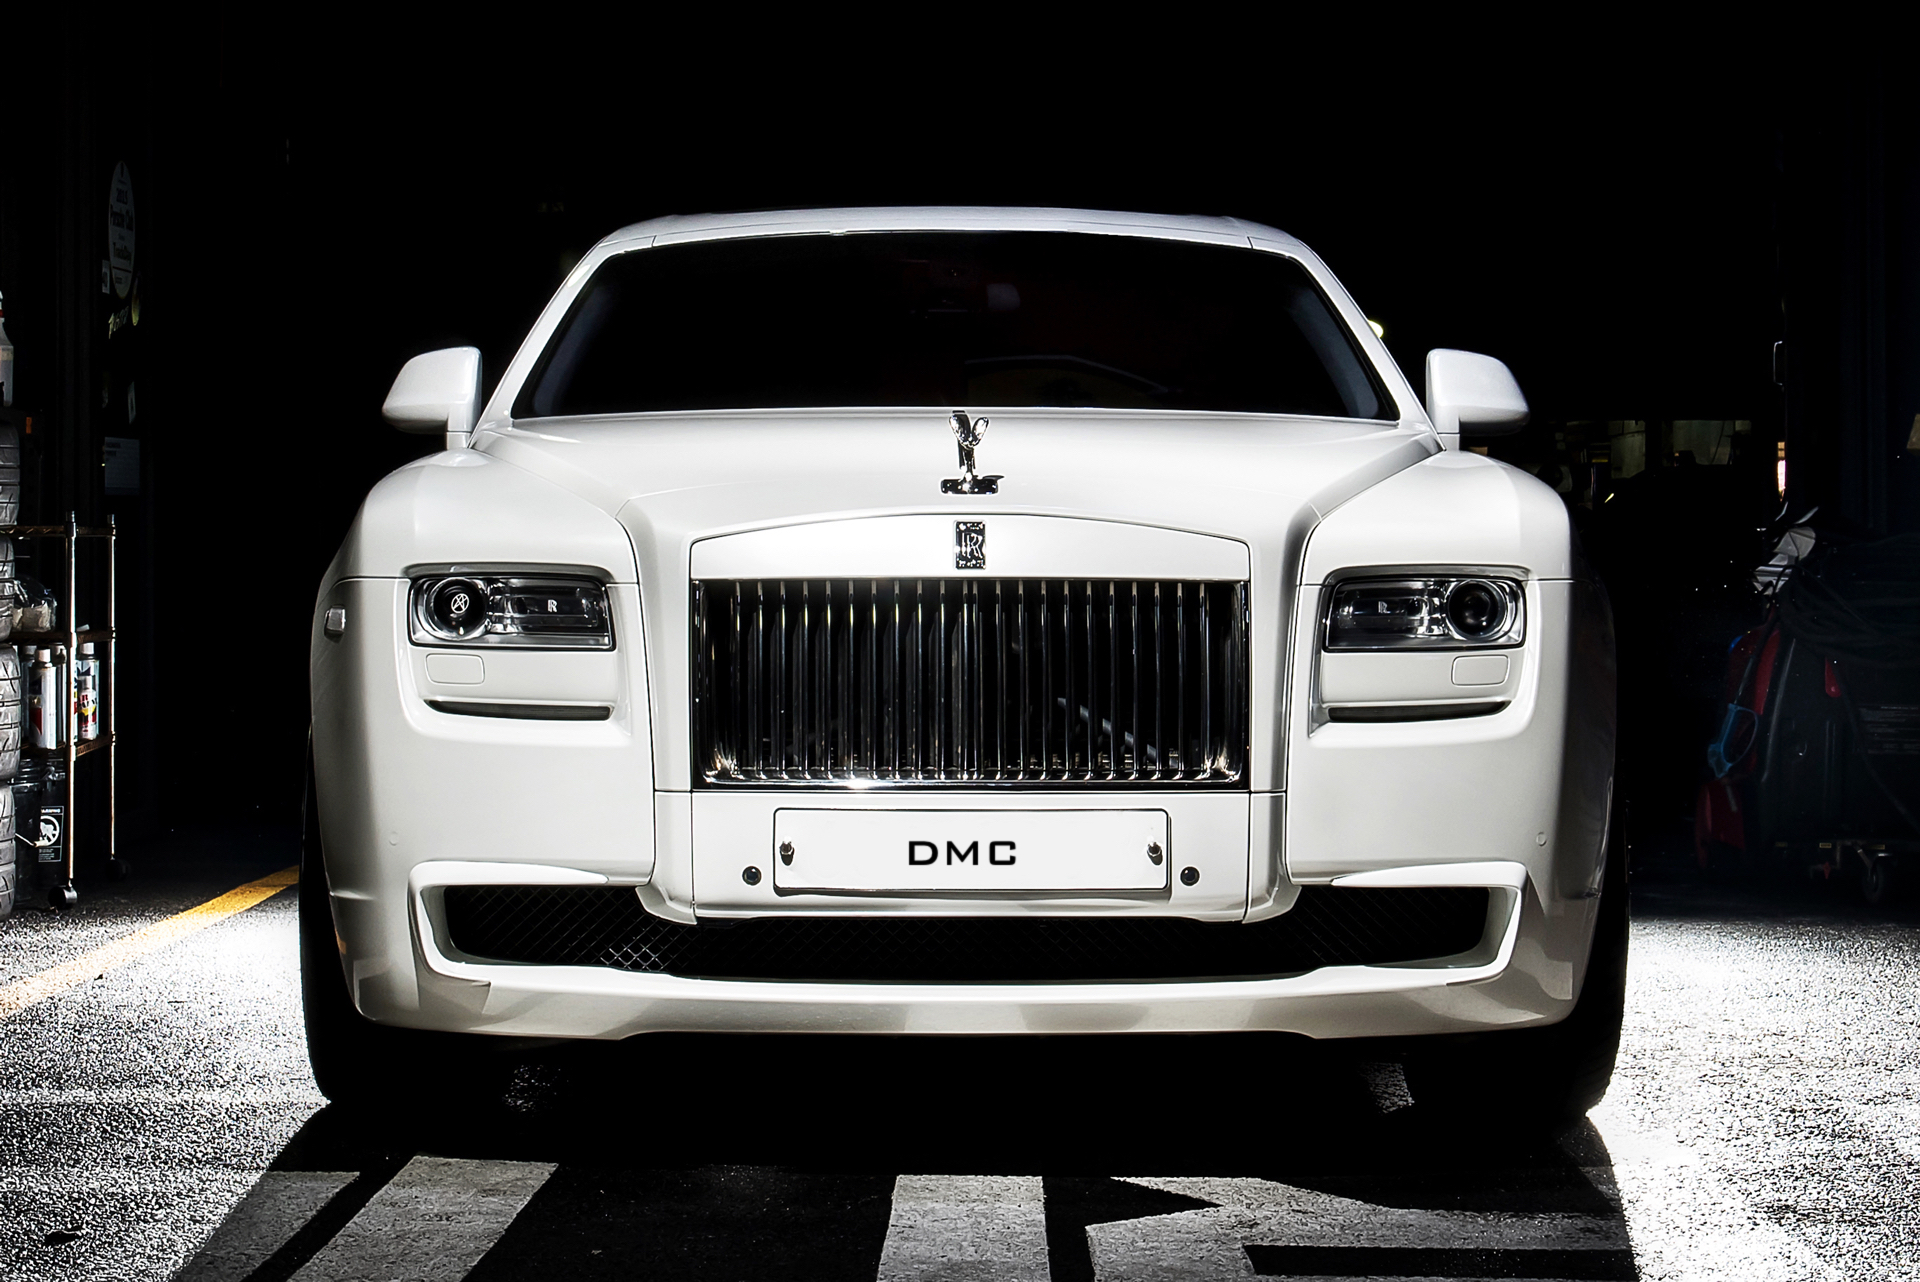 DMC Rolls Royce Ghost "SaRangHae"